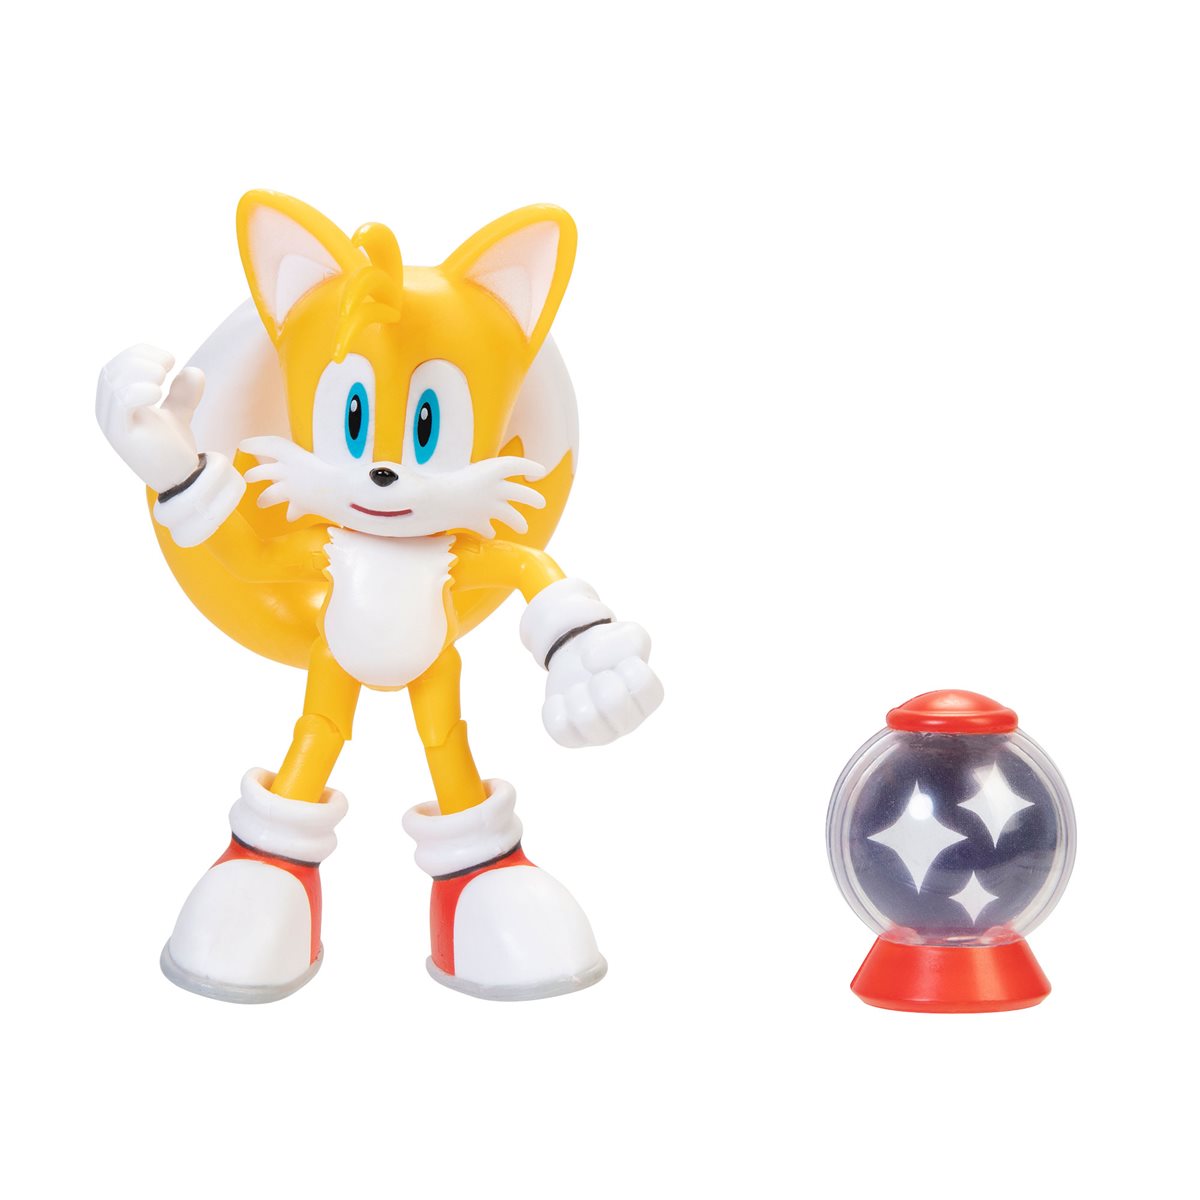 Boneco Sonic The Hedgehog Tomy - Sonic Boom Articulado Sega